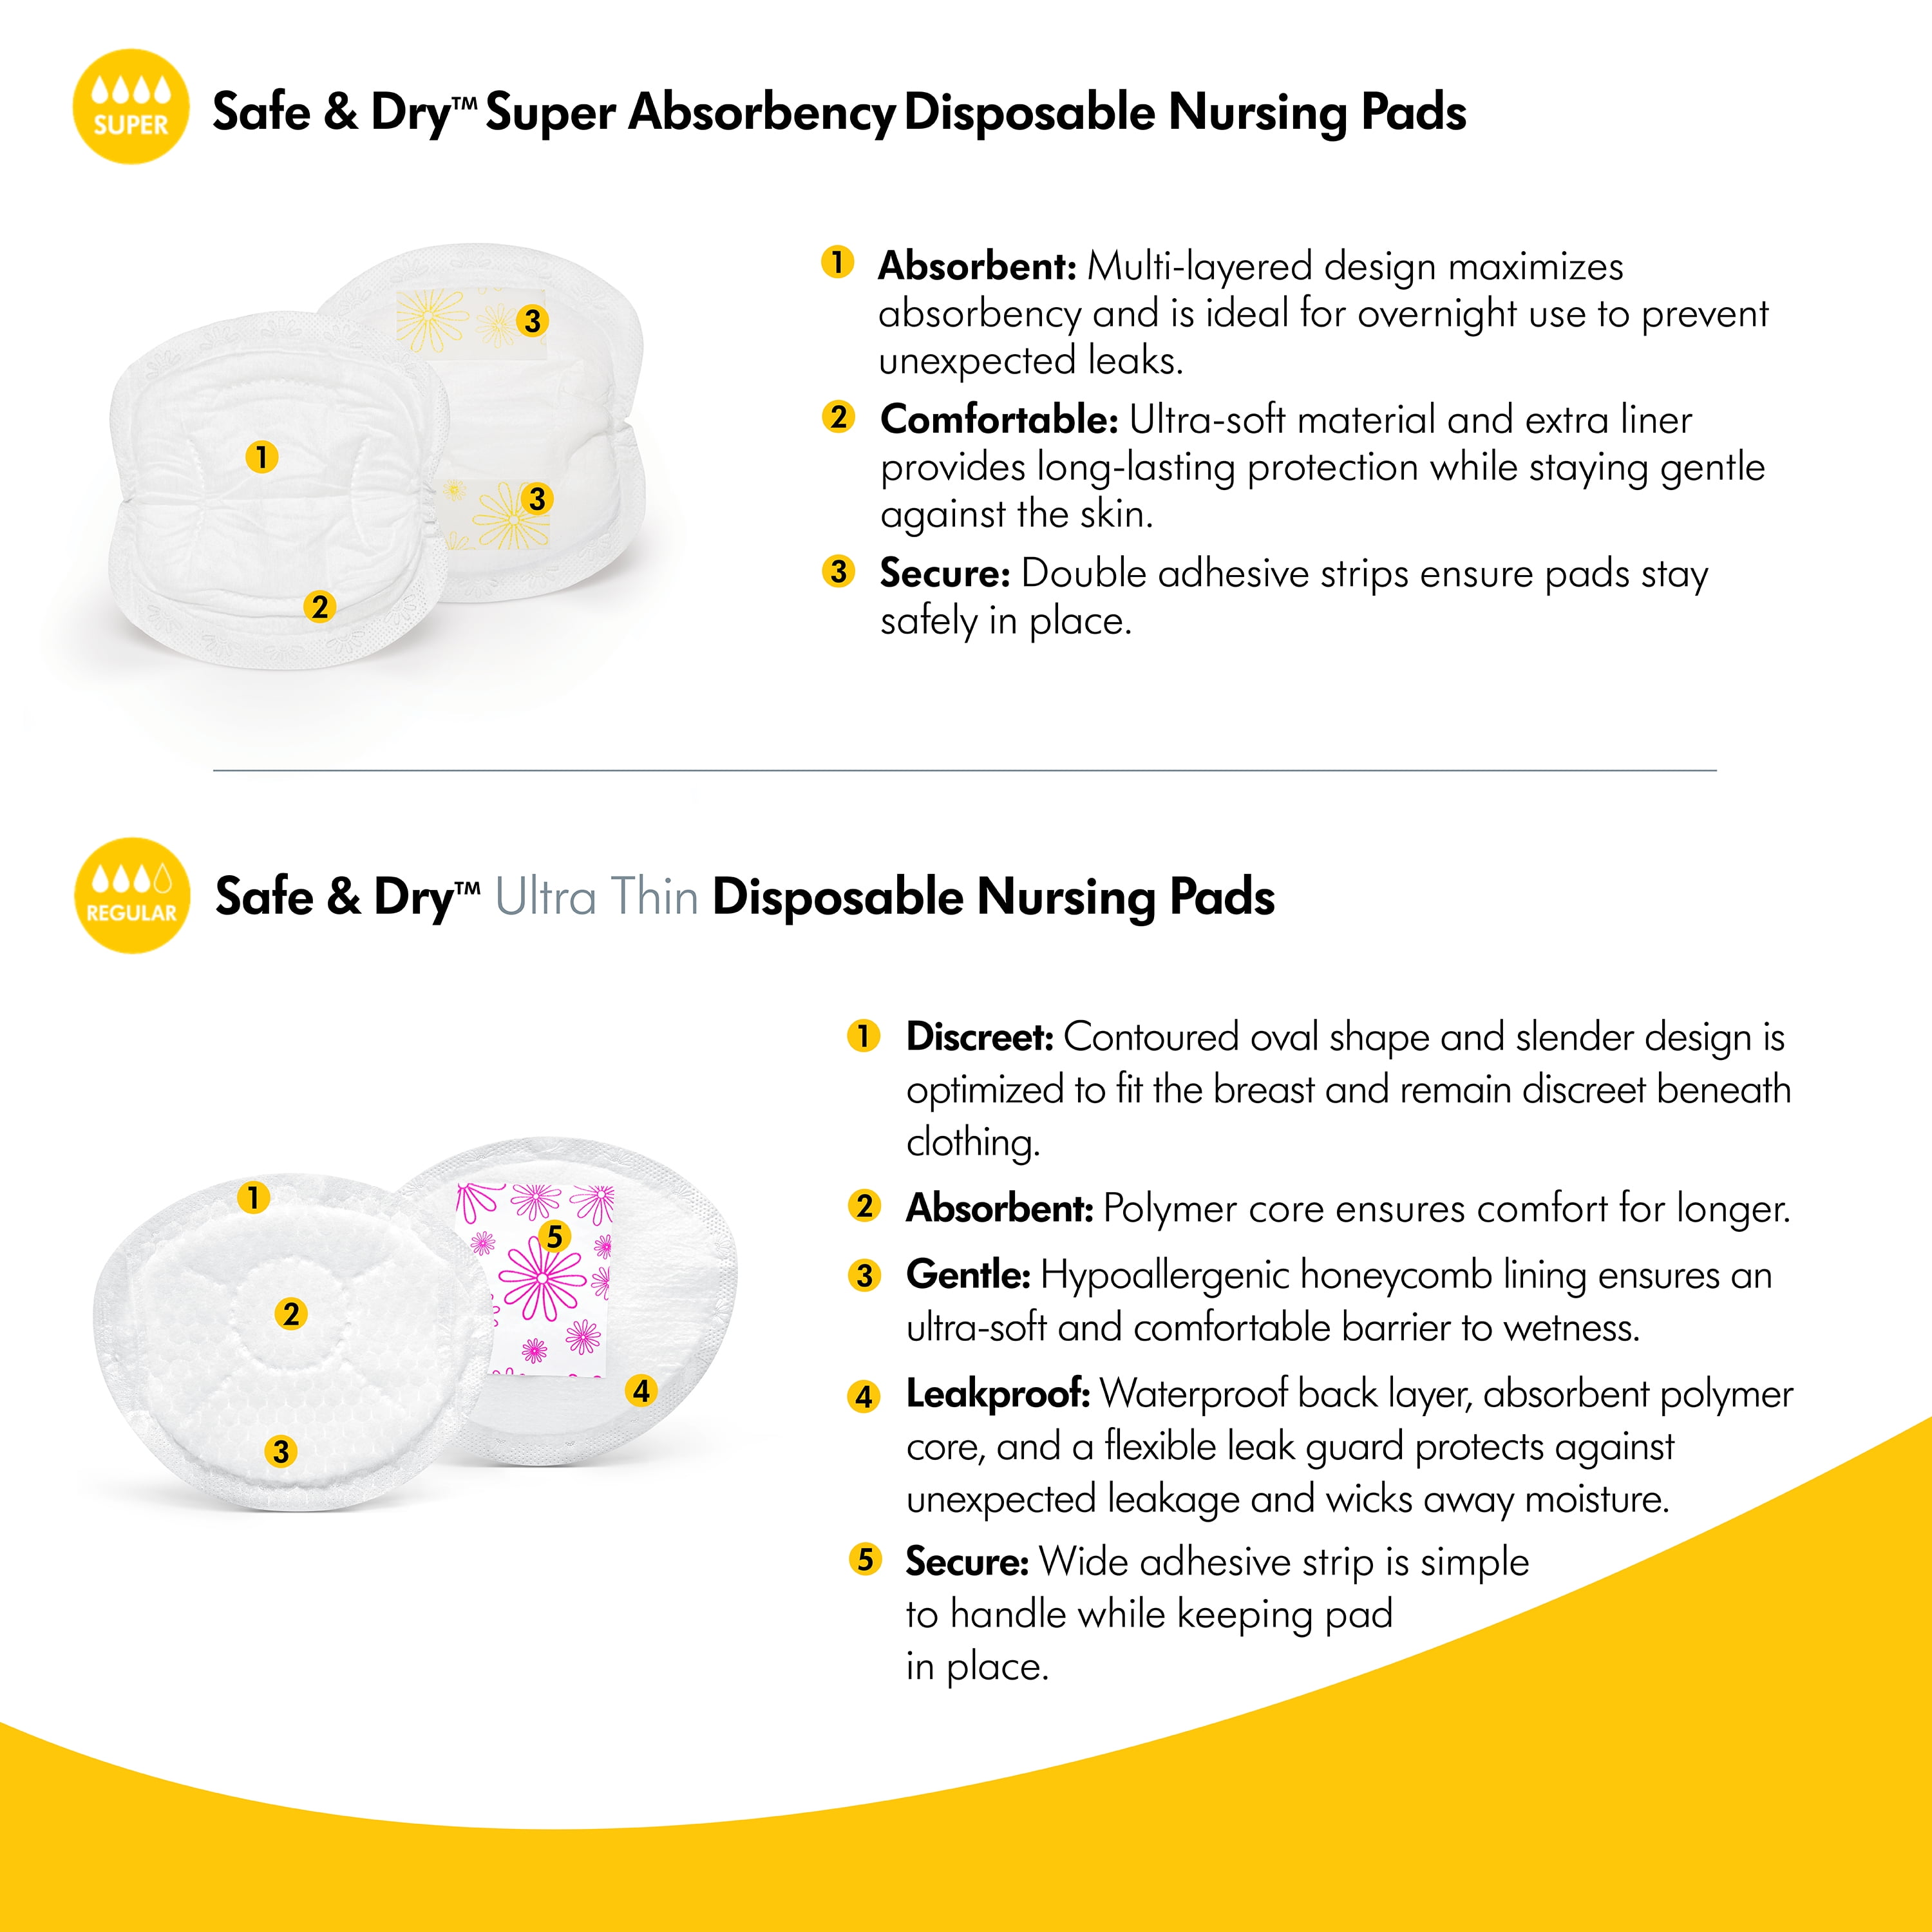 Medela Safe & Dry Ultra Thin Disposable Nursing Pads, 30 Count Breast Pads  for Breastfeeding, Leakproof Design, Slender and Contoured for Optimal Fit